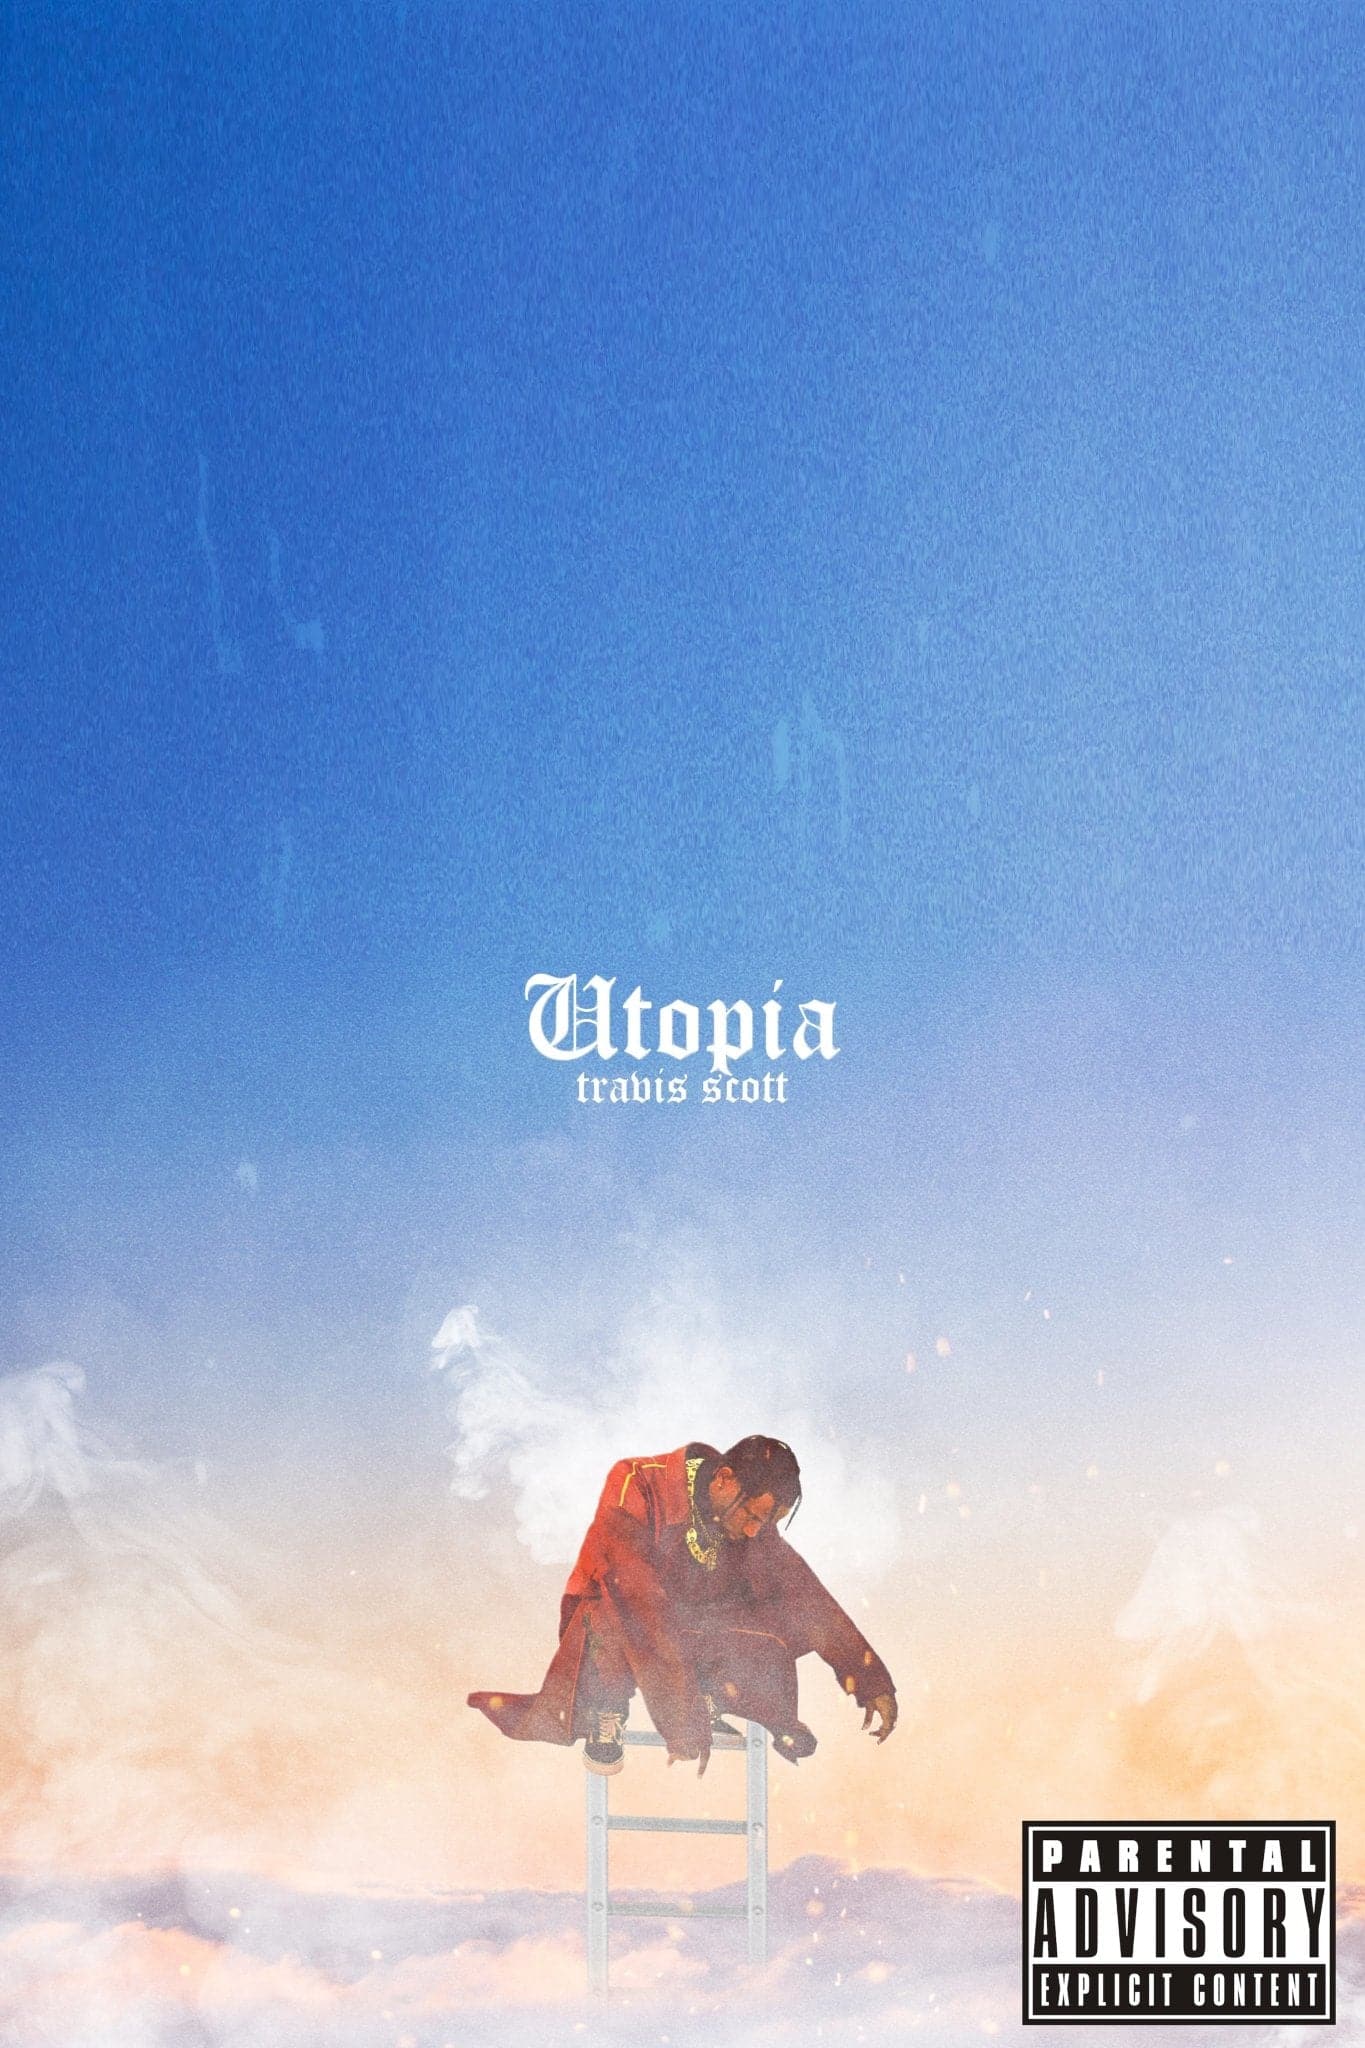 Travis Scott - Utopia Poster Print - Framed Options Available